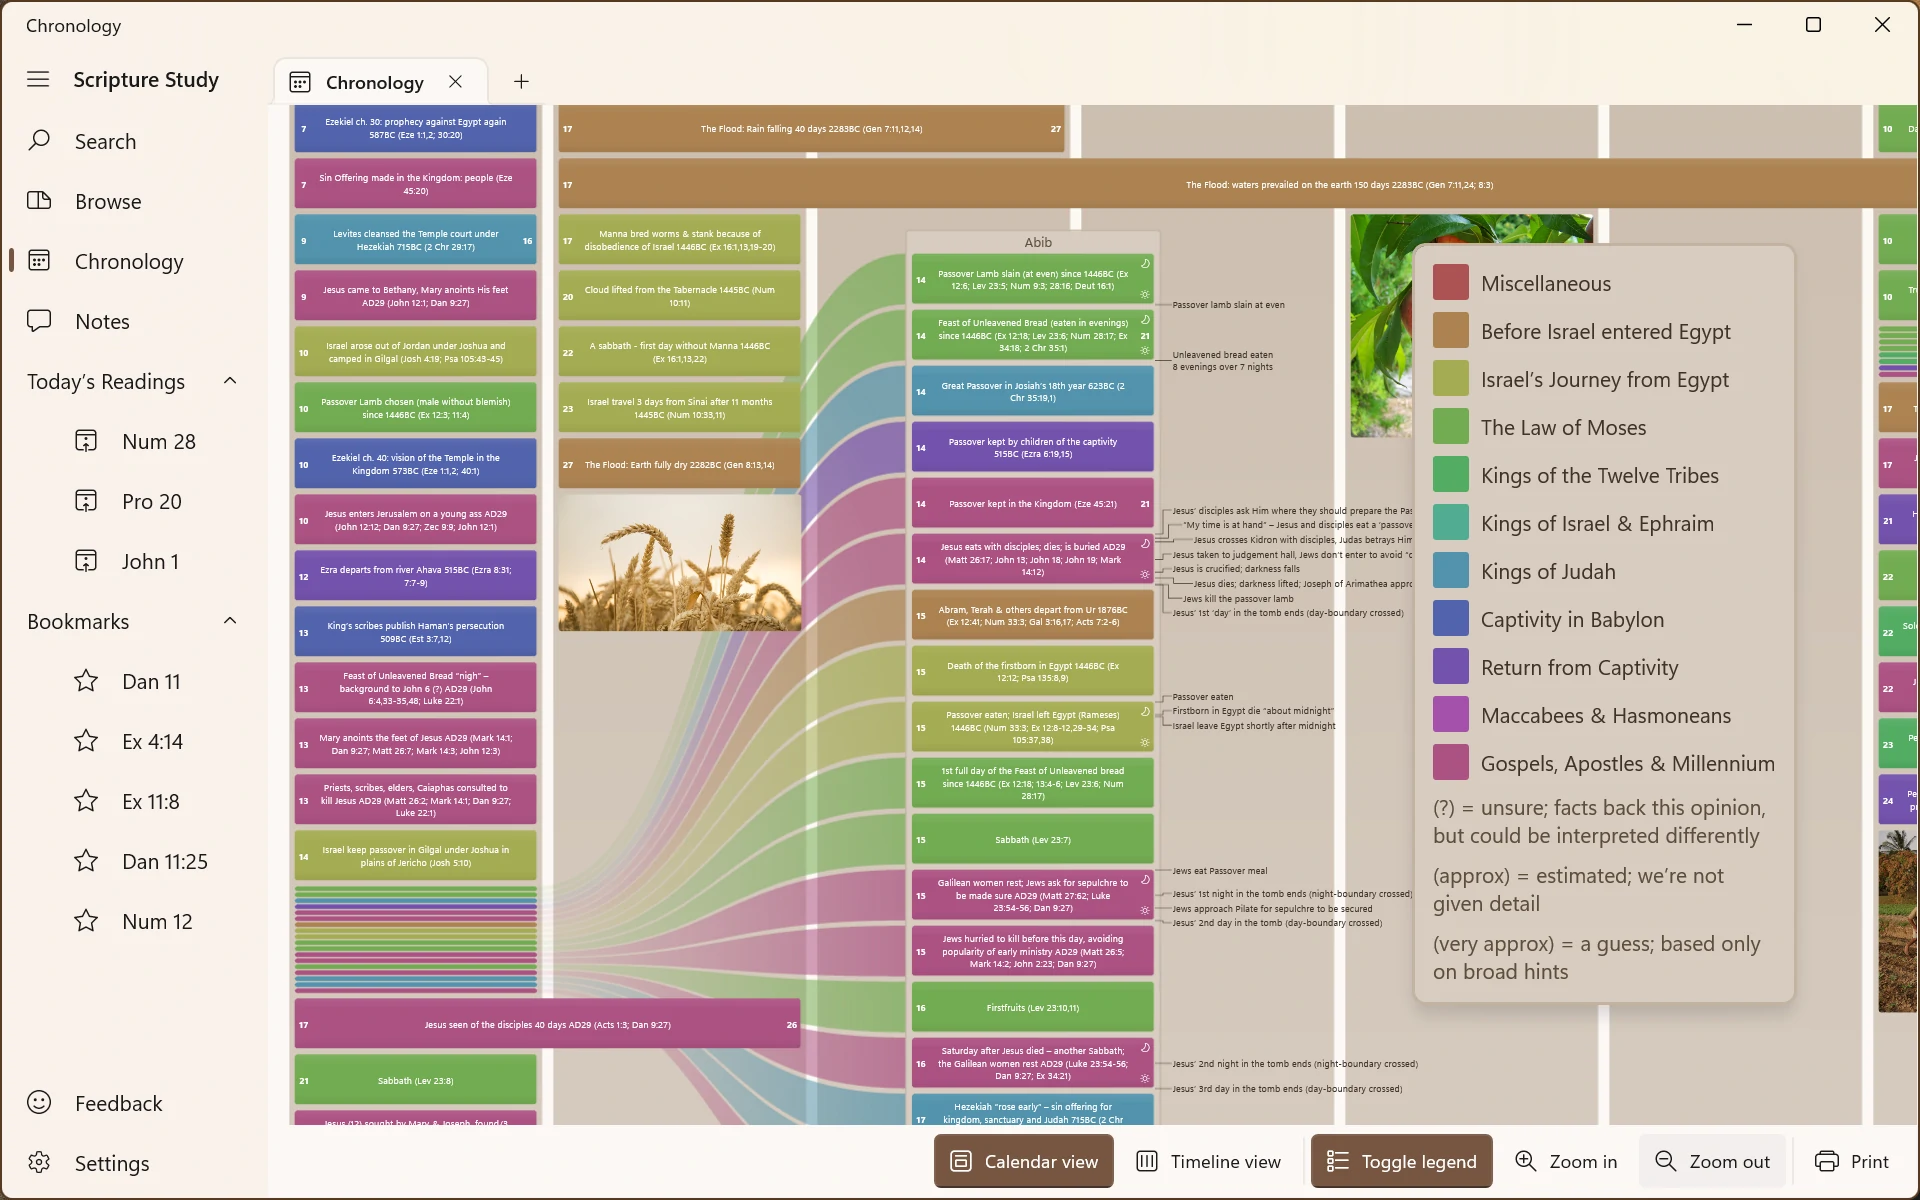 Screenshot showing a calendar view of Bible events